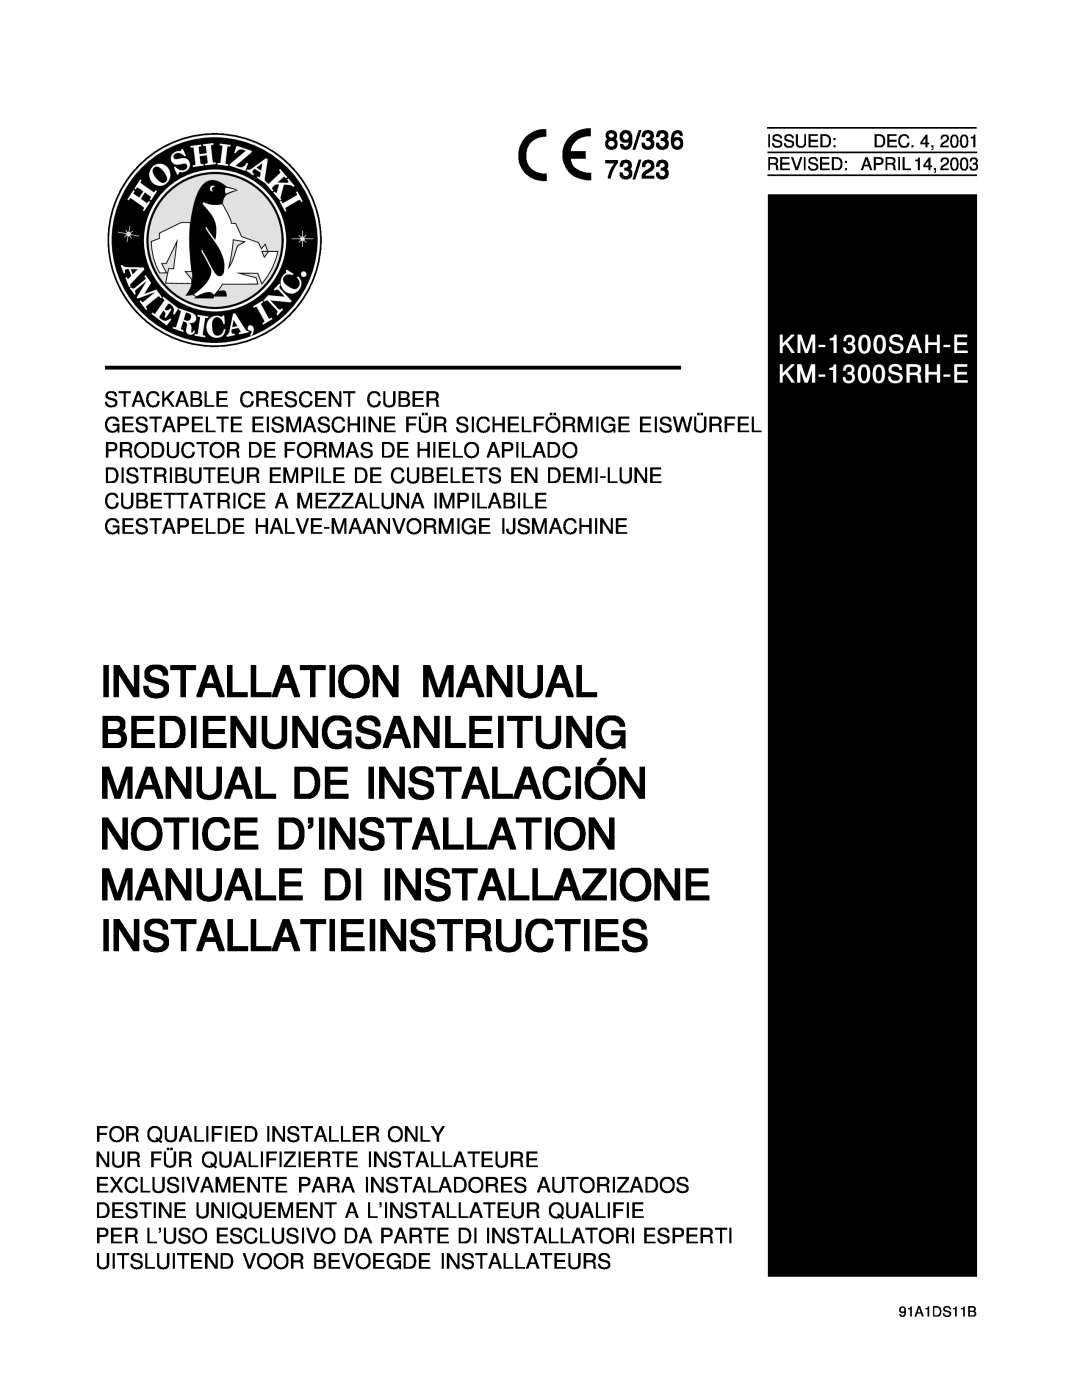 Hoshizaki installation manual 89/336 73/23, KM-1300SAH-E KM-1300SRH-E 